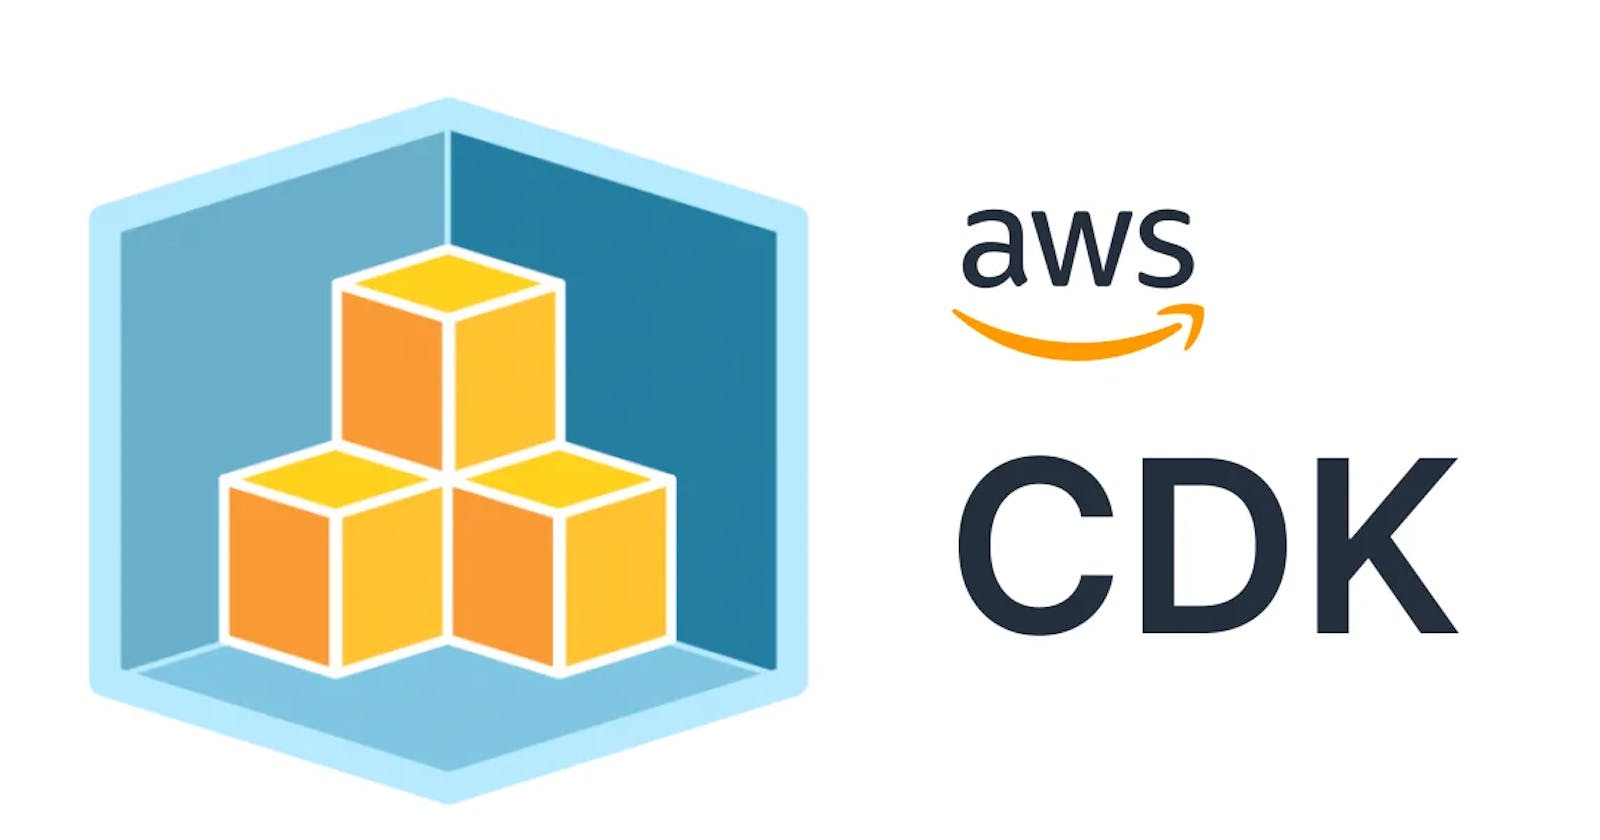 What is AWS CDK (Cloud Development Kit)